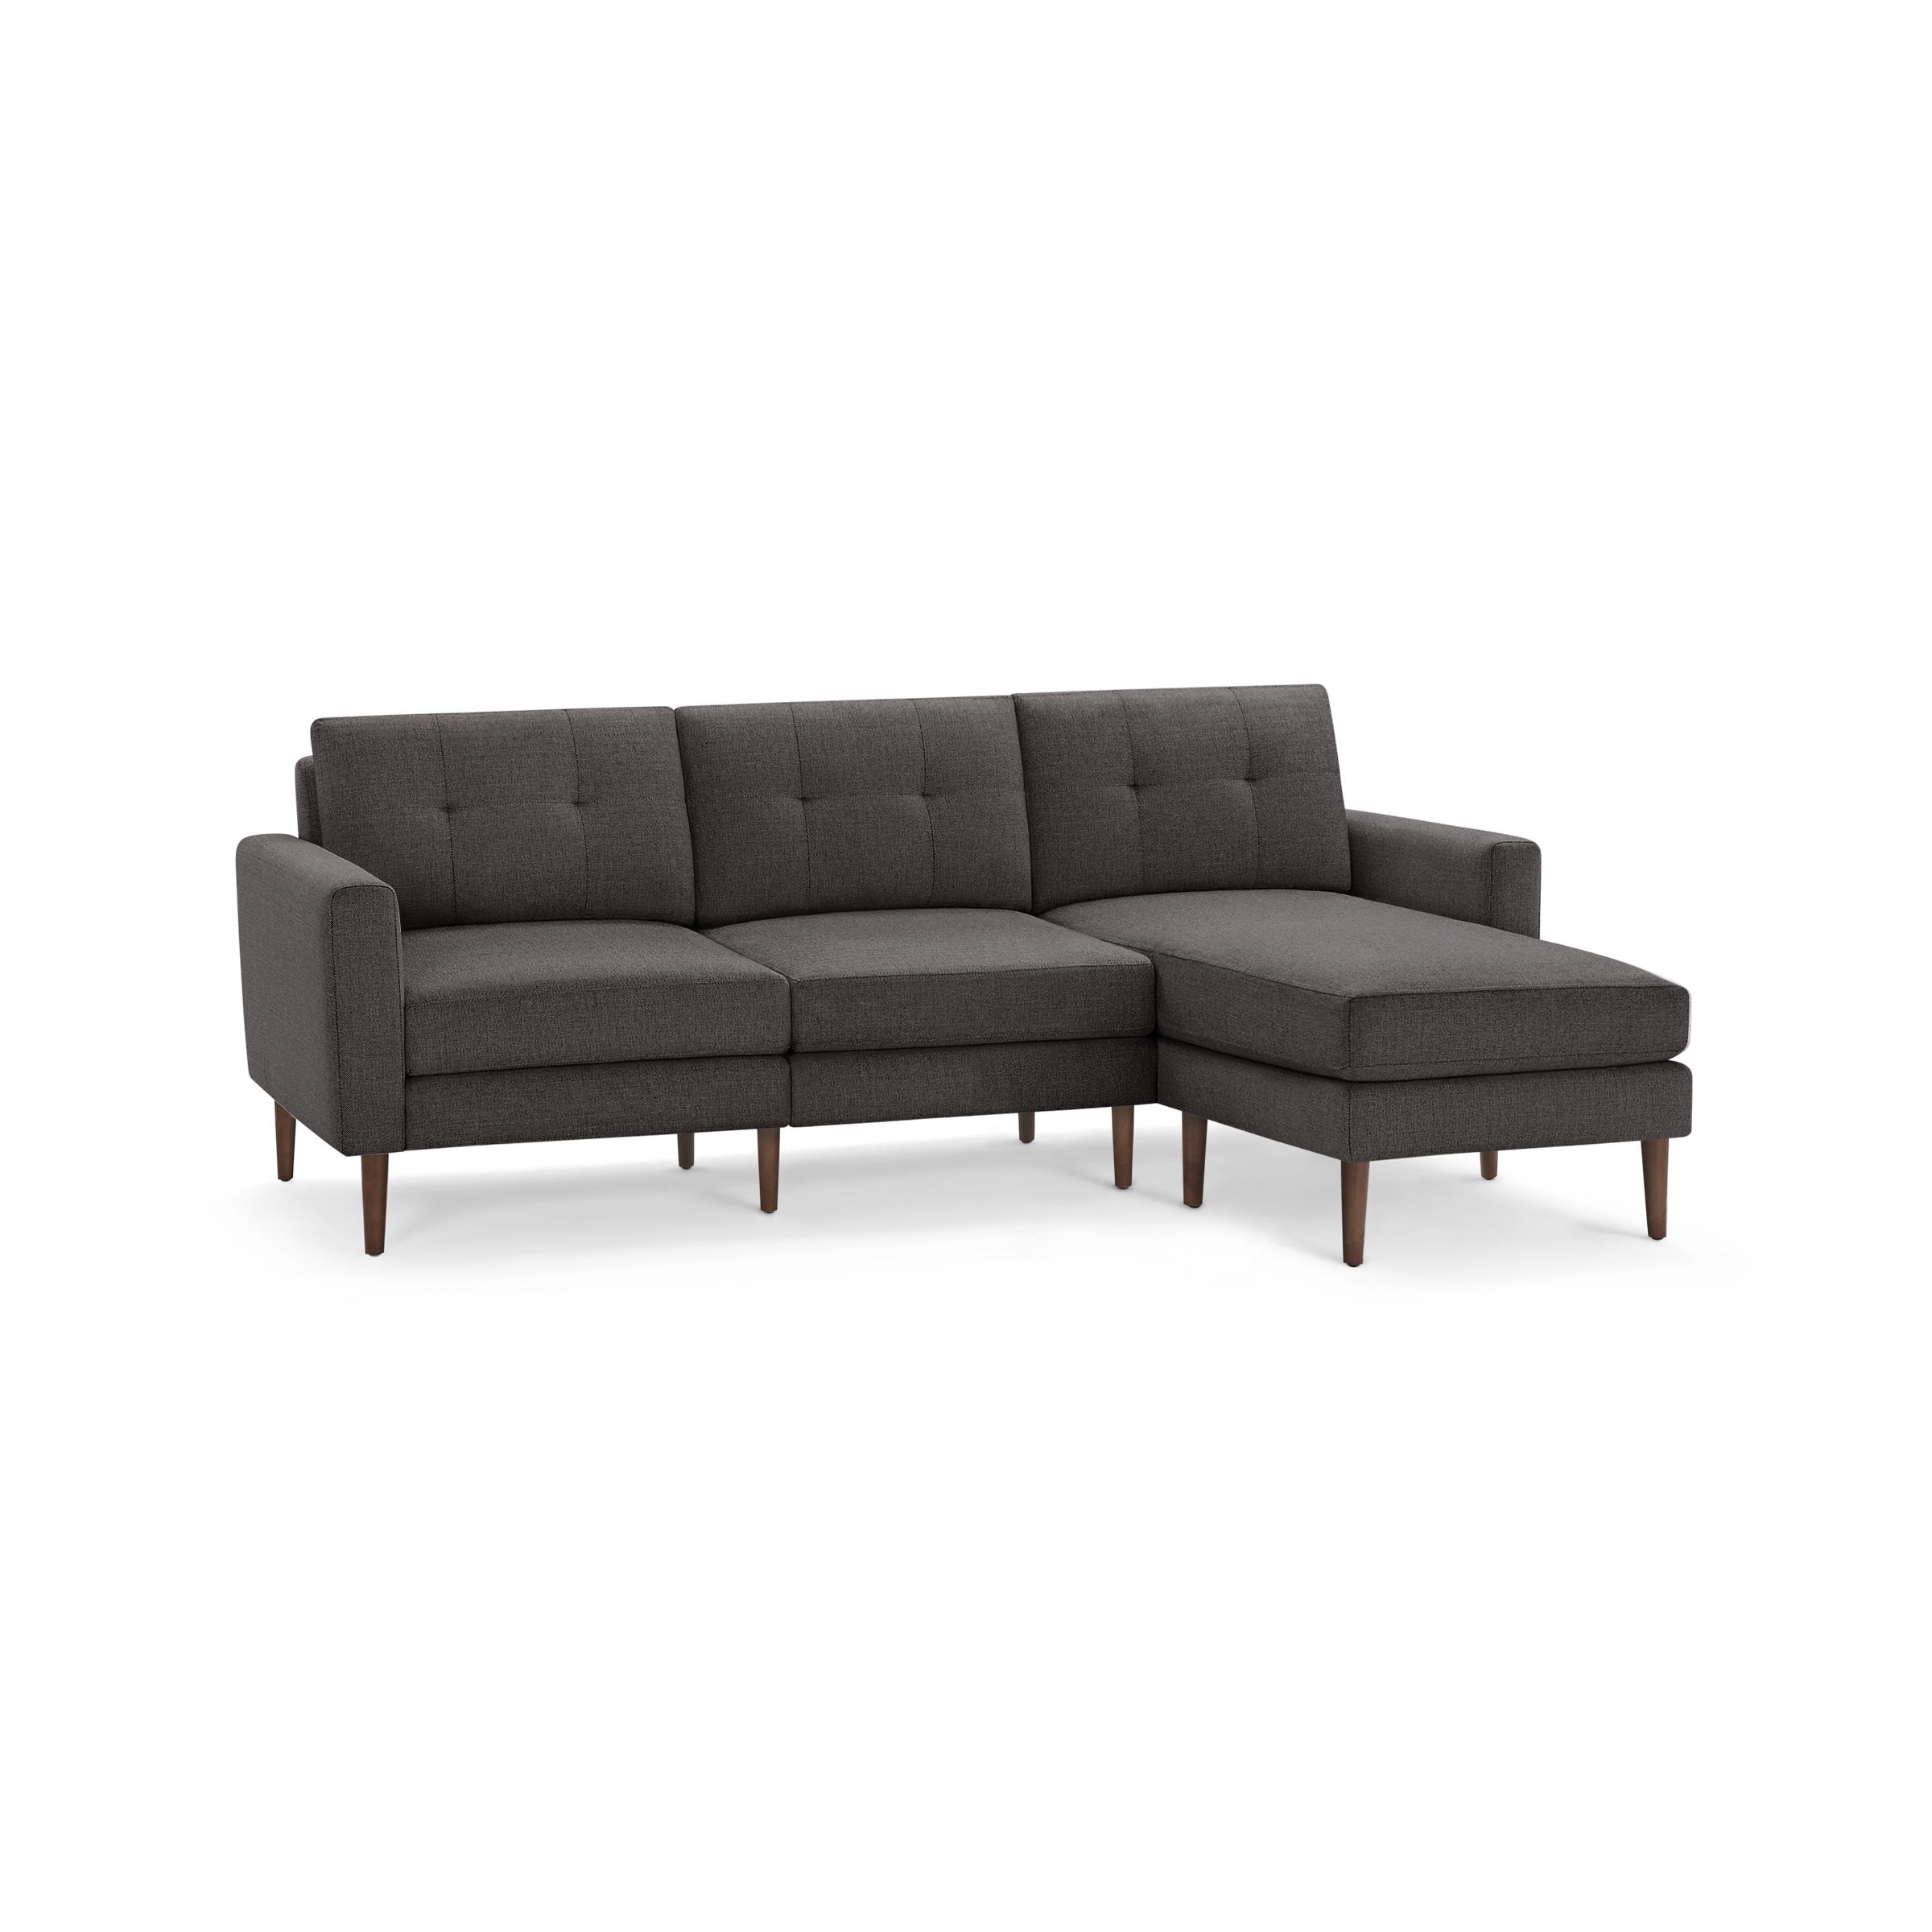 Nomad Sofa Sectional in Charcoal, Walnut Legs, Leg Finish: WalnutLegs - Image 1